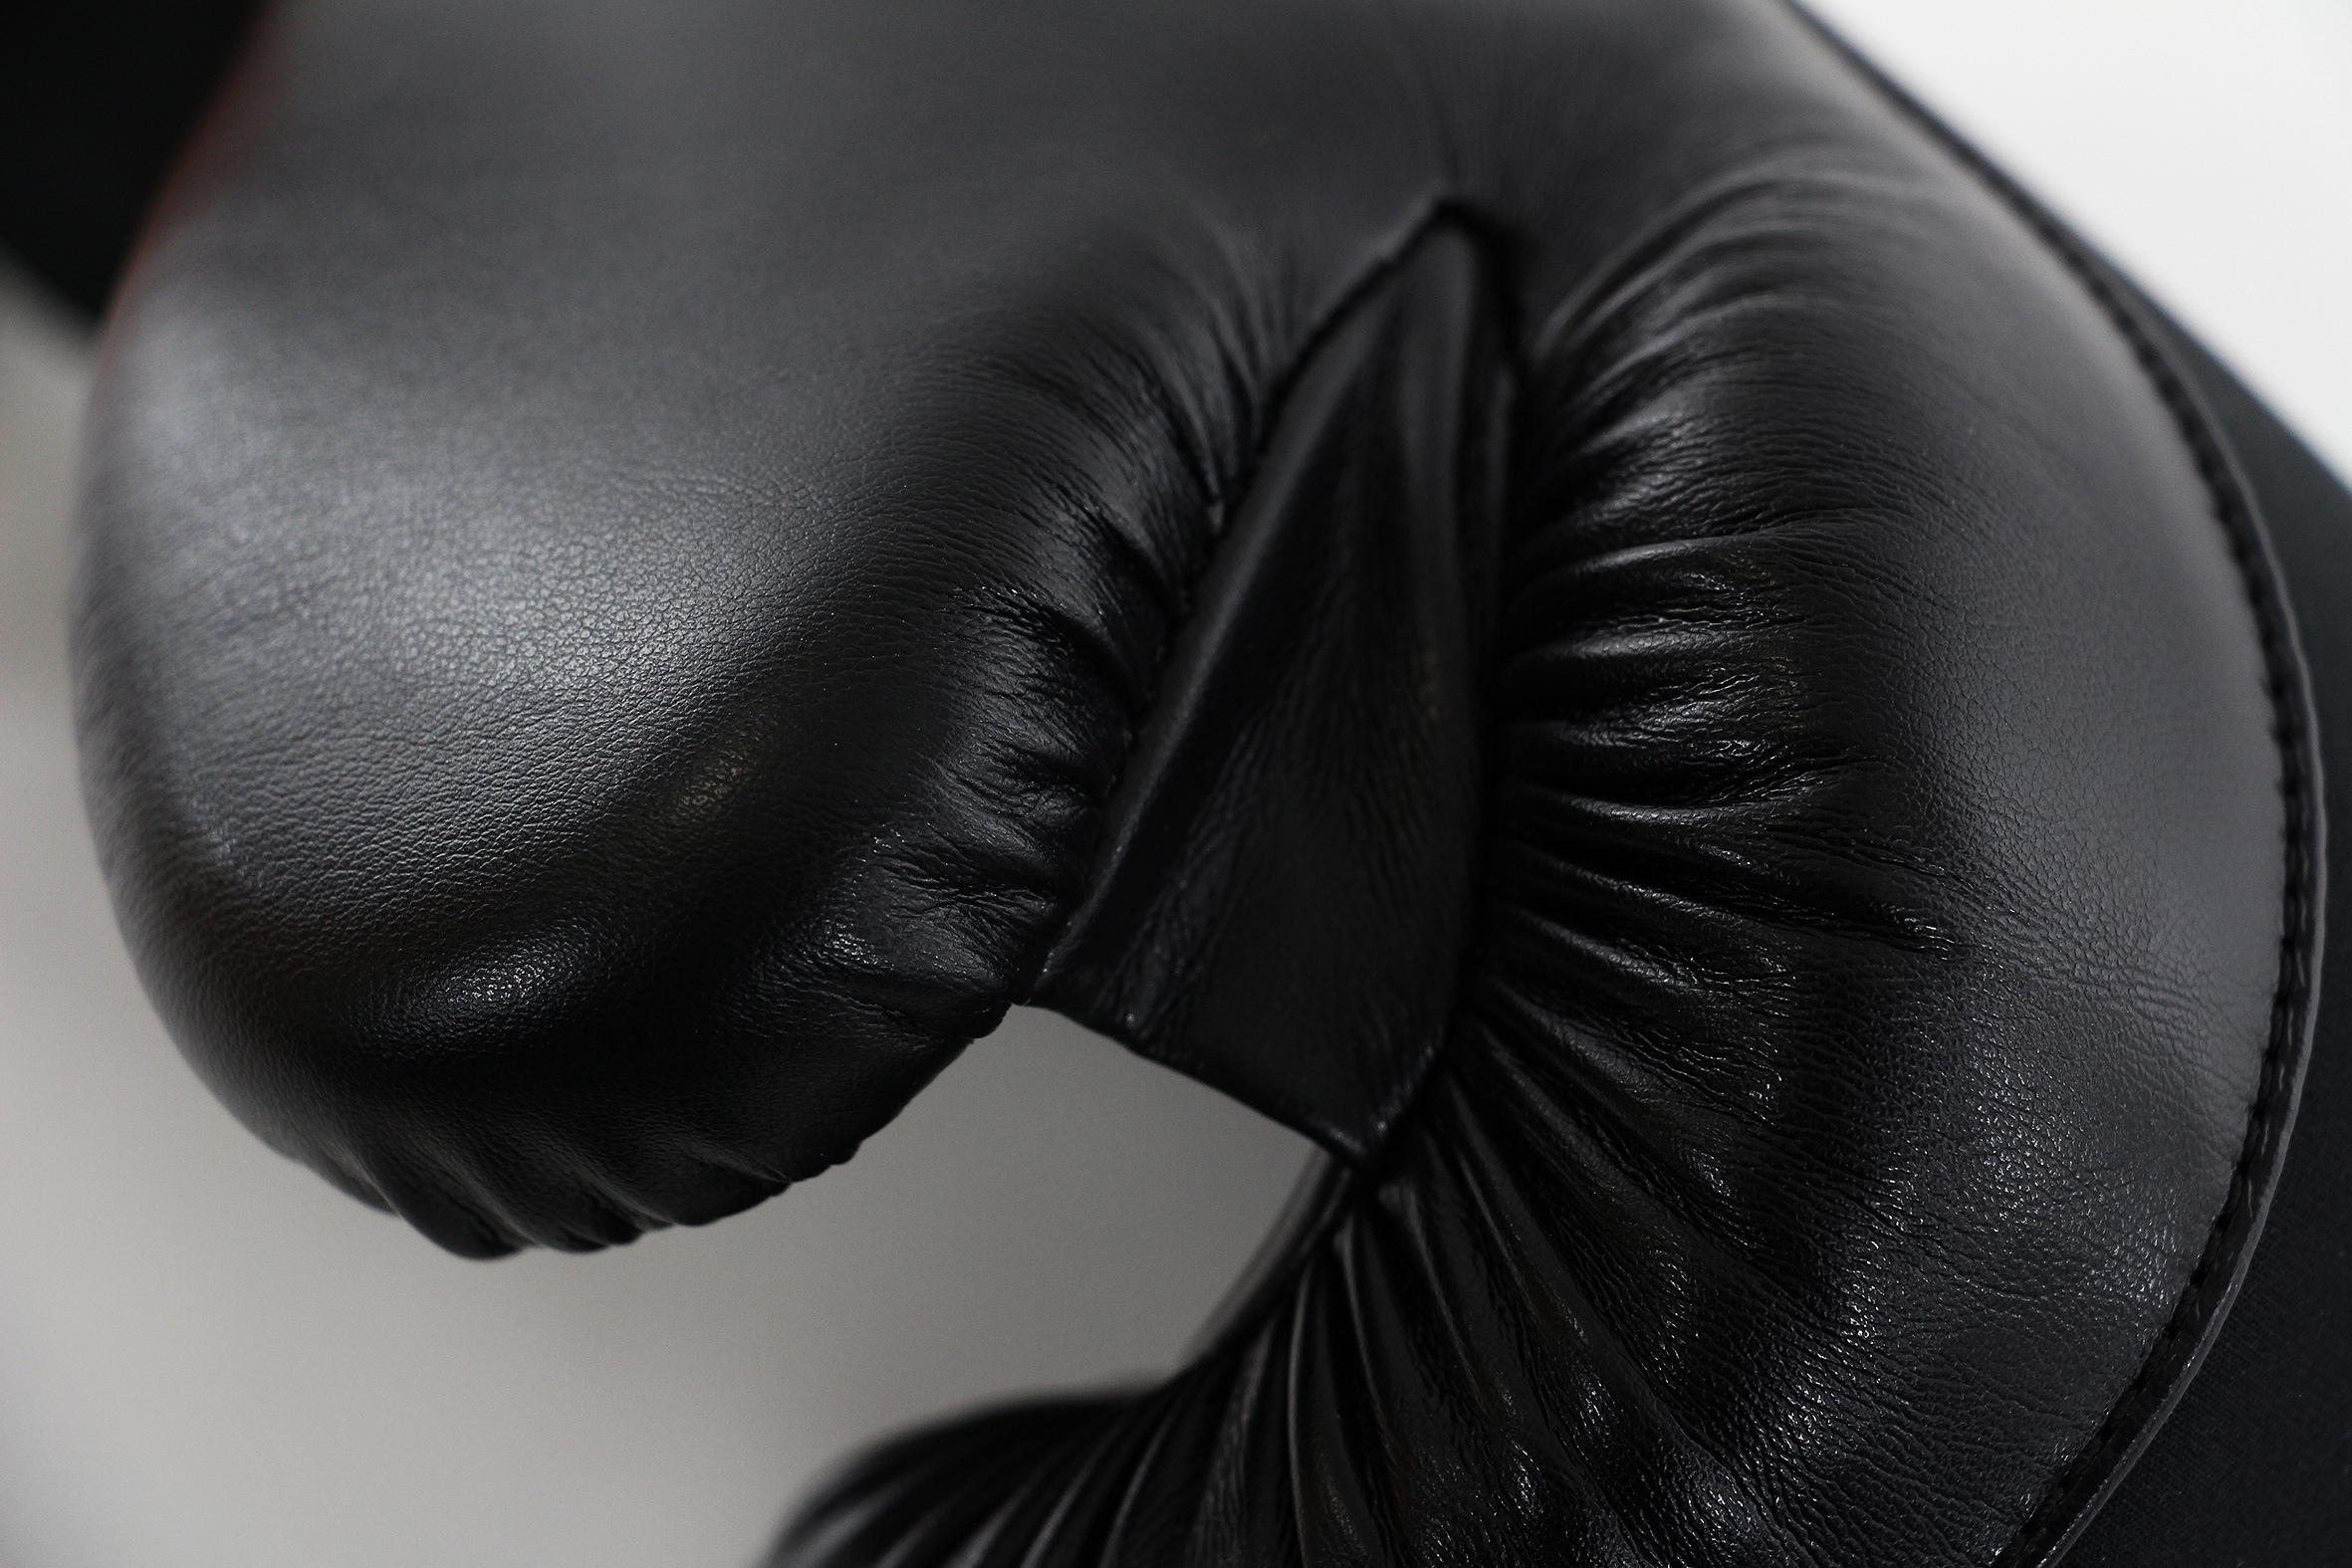 adidas Performance Boxhandschuhe »Boxing Gloves Washable« bei